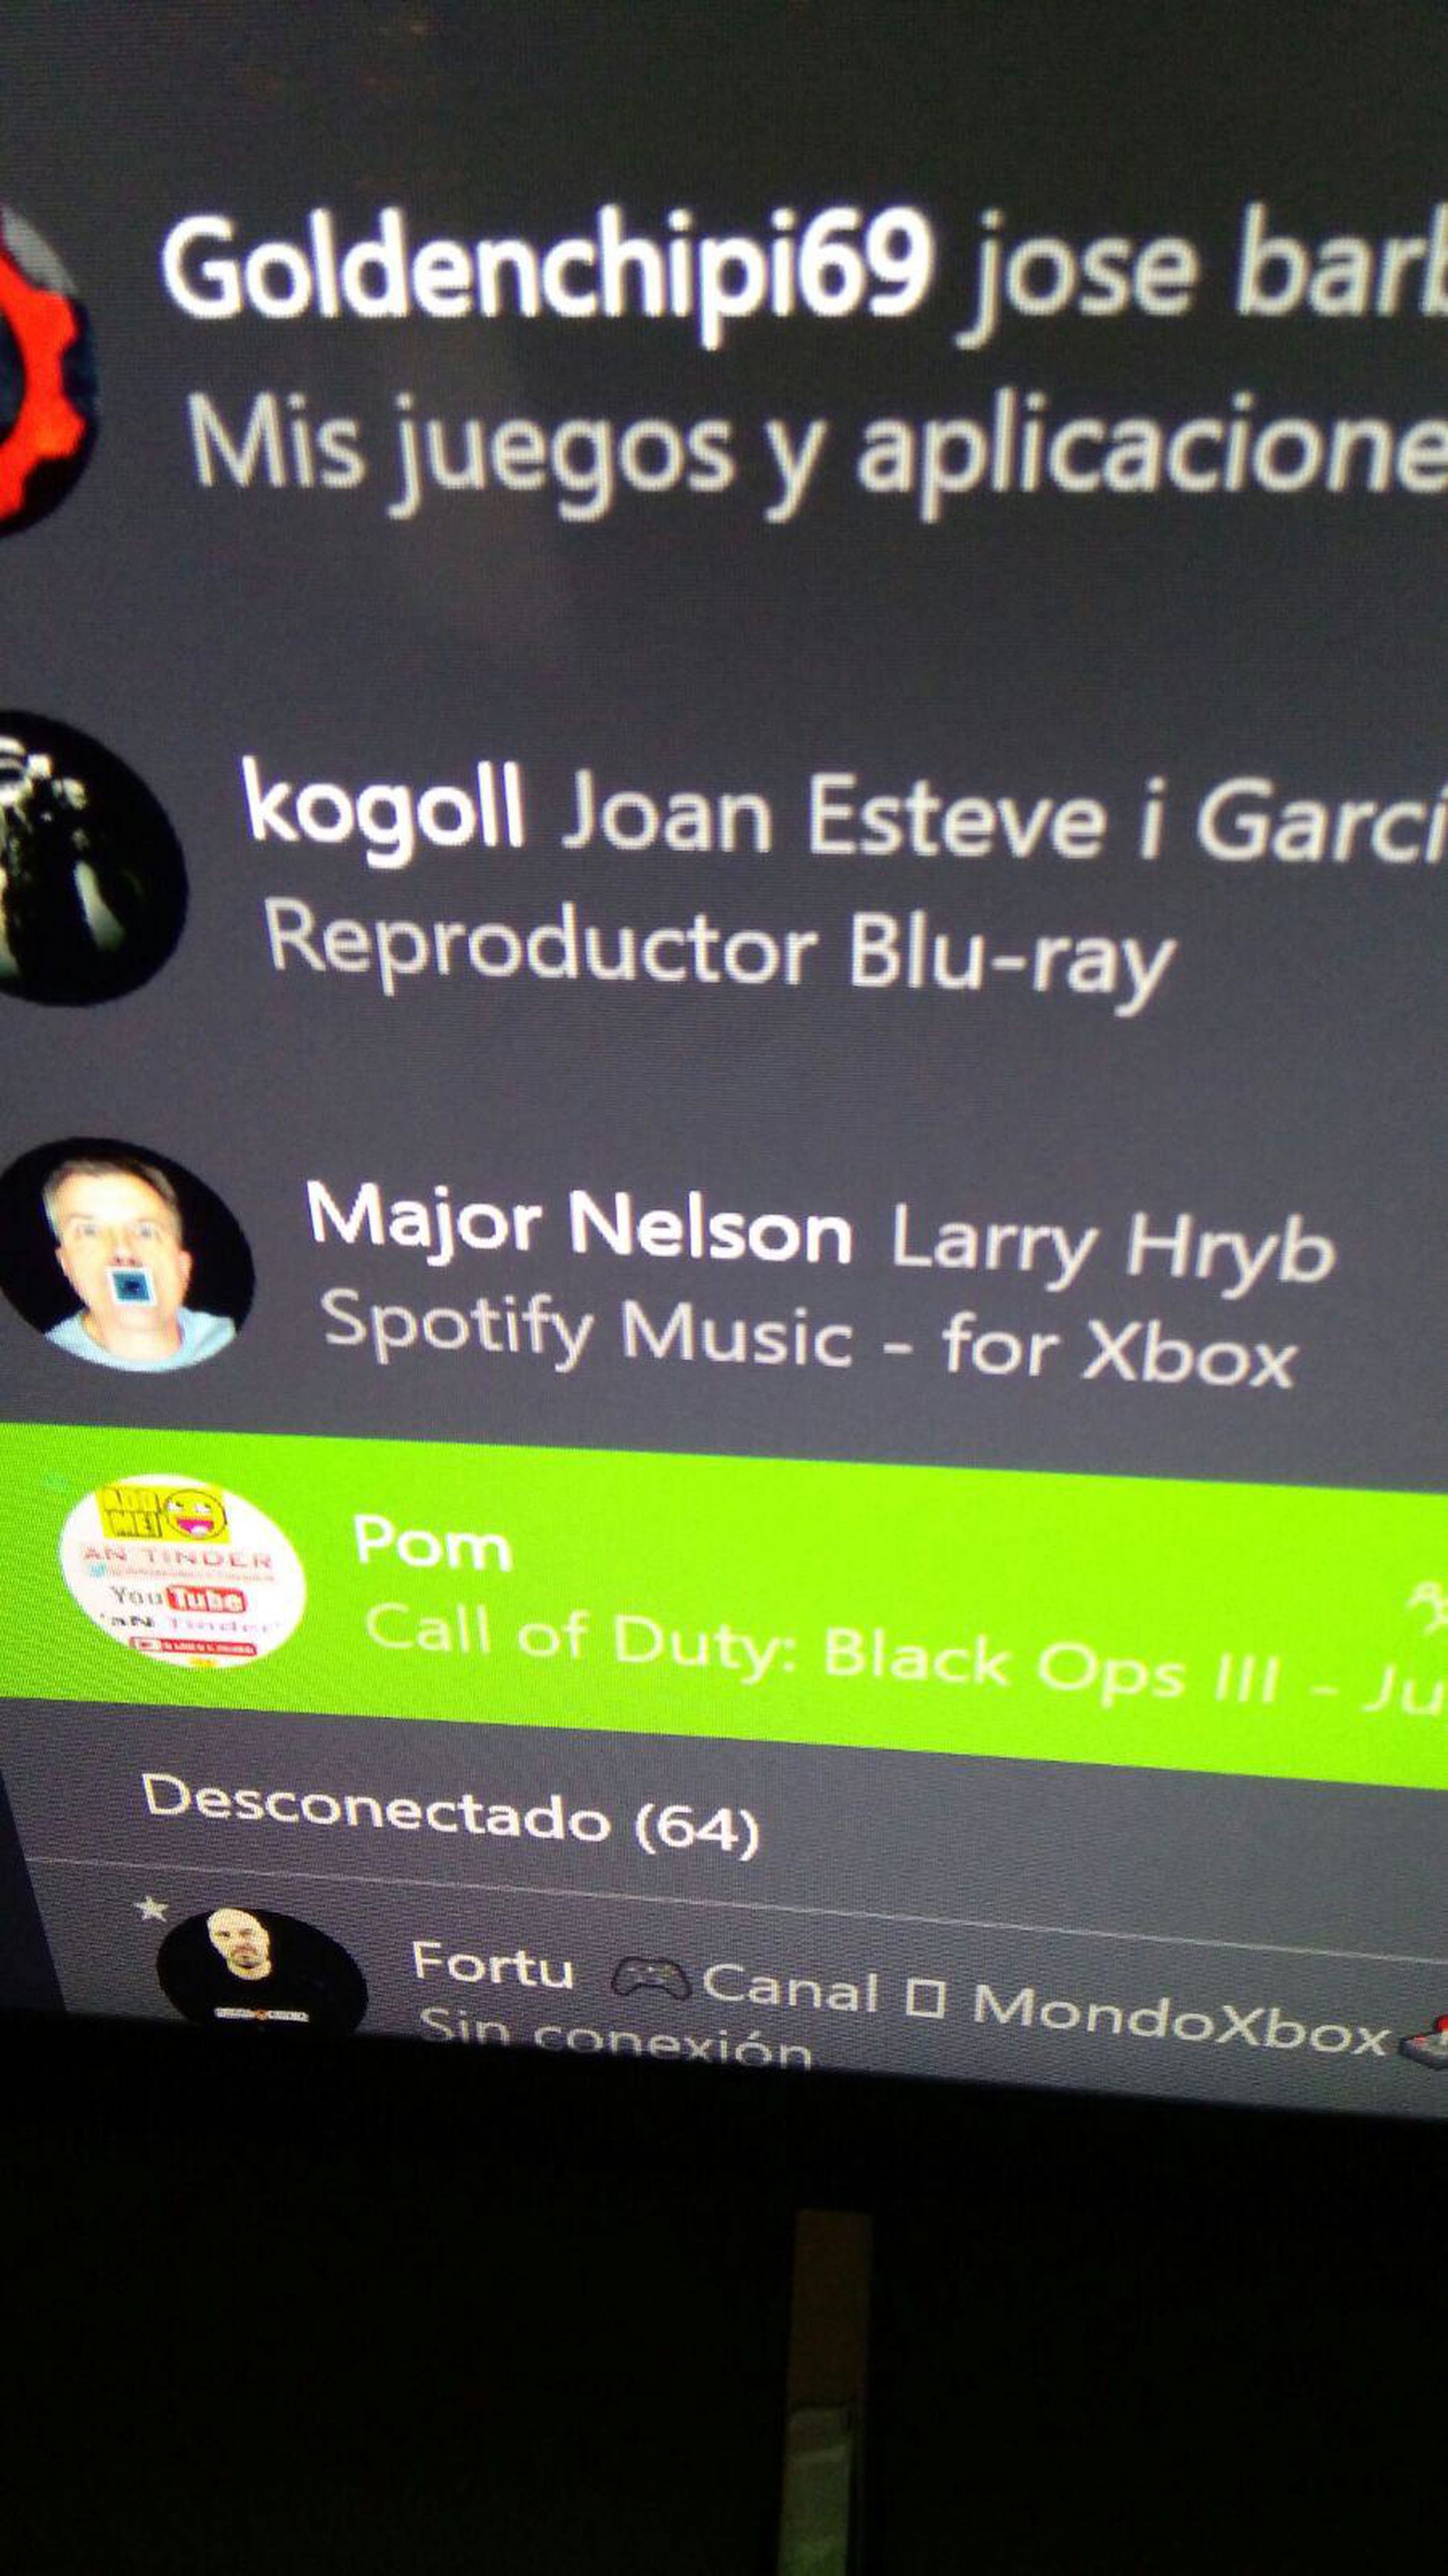 Microsoft’s Larry Hryb using Spotify on Xbox